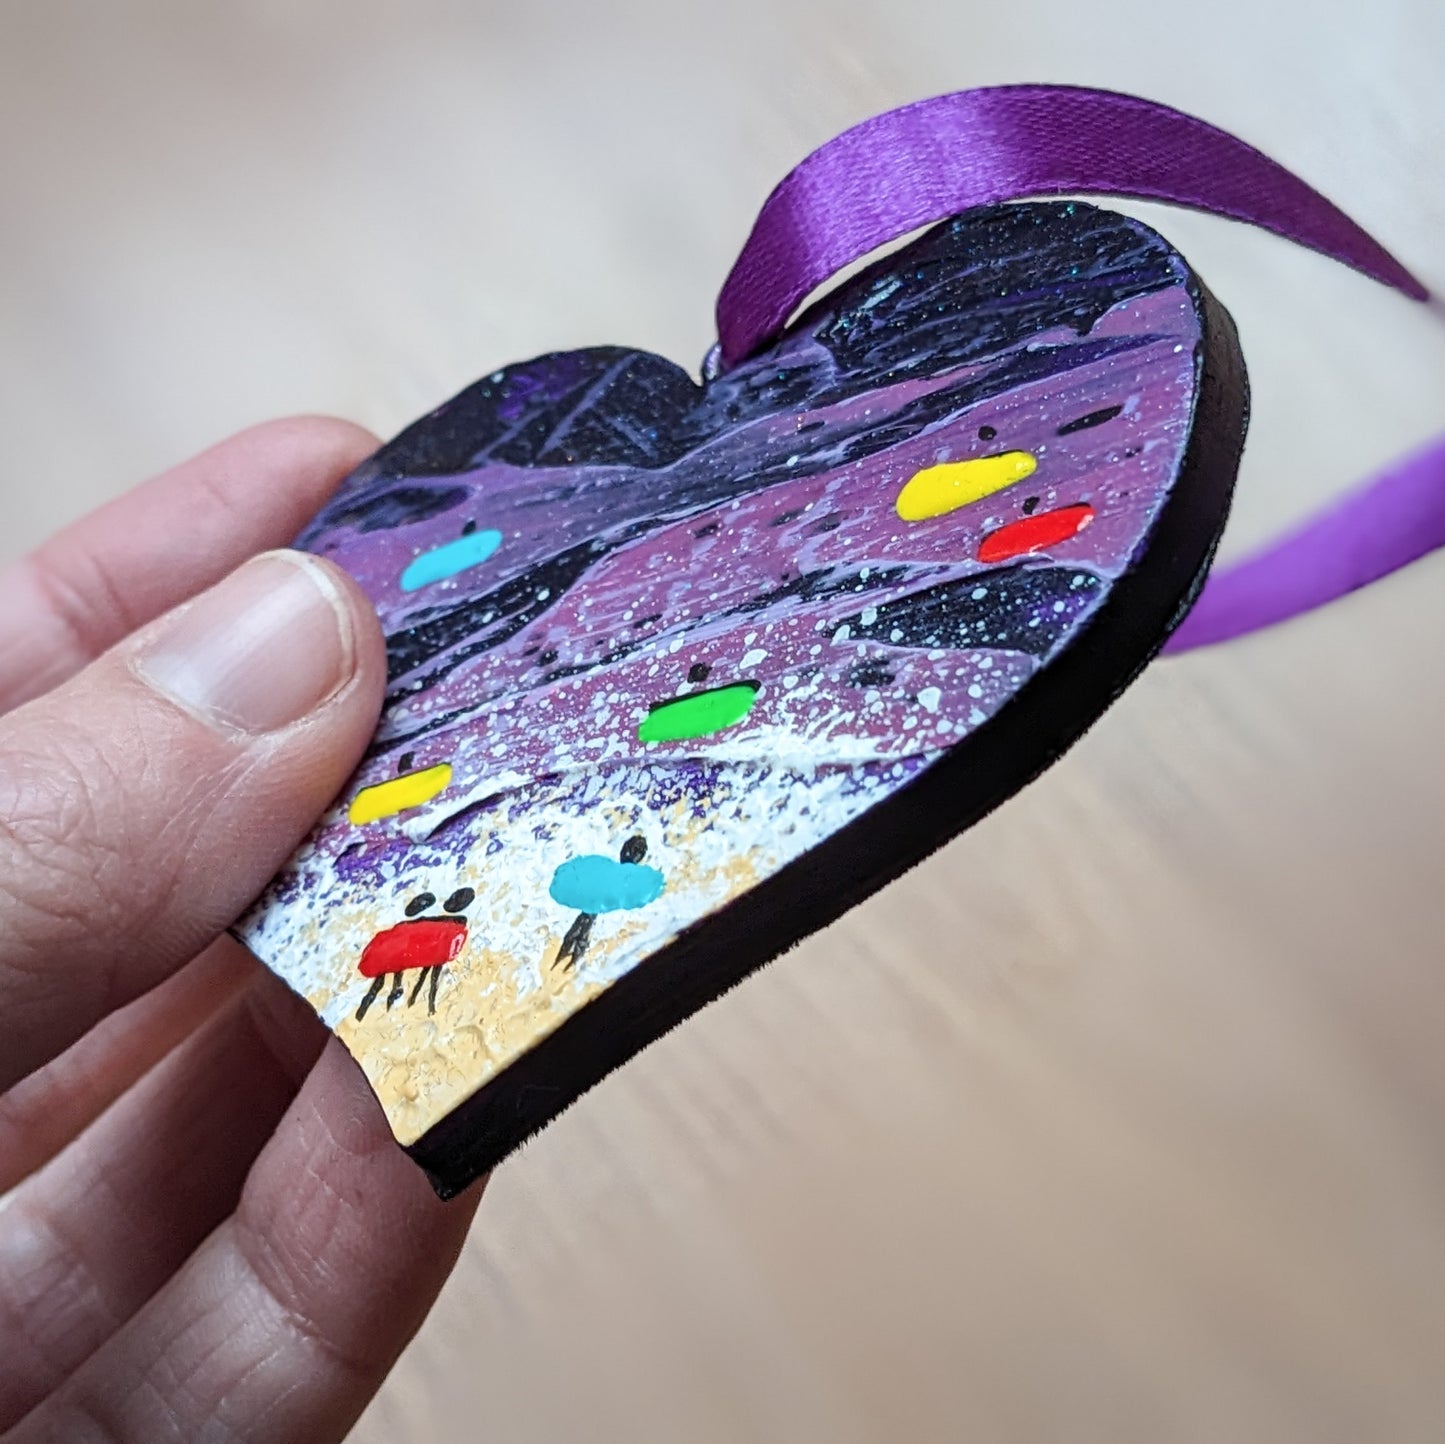 Hand Painted Wooden Flat Heart - Purple